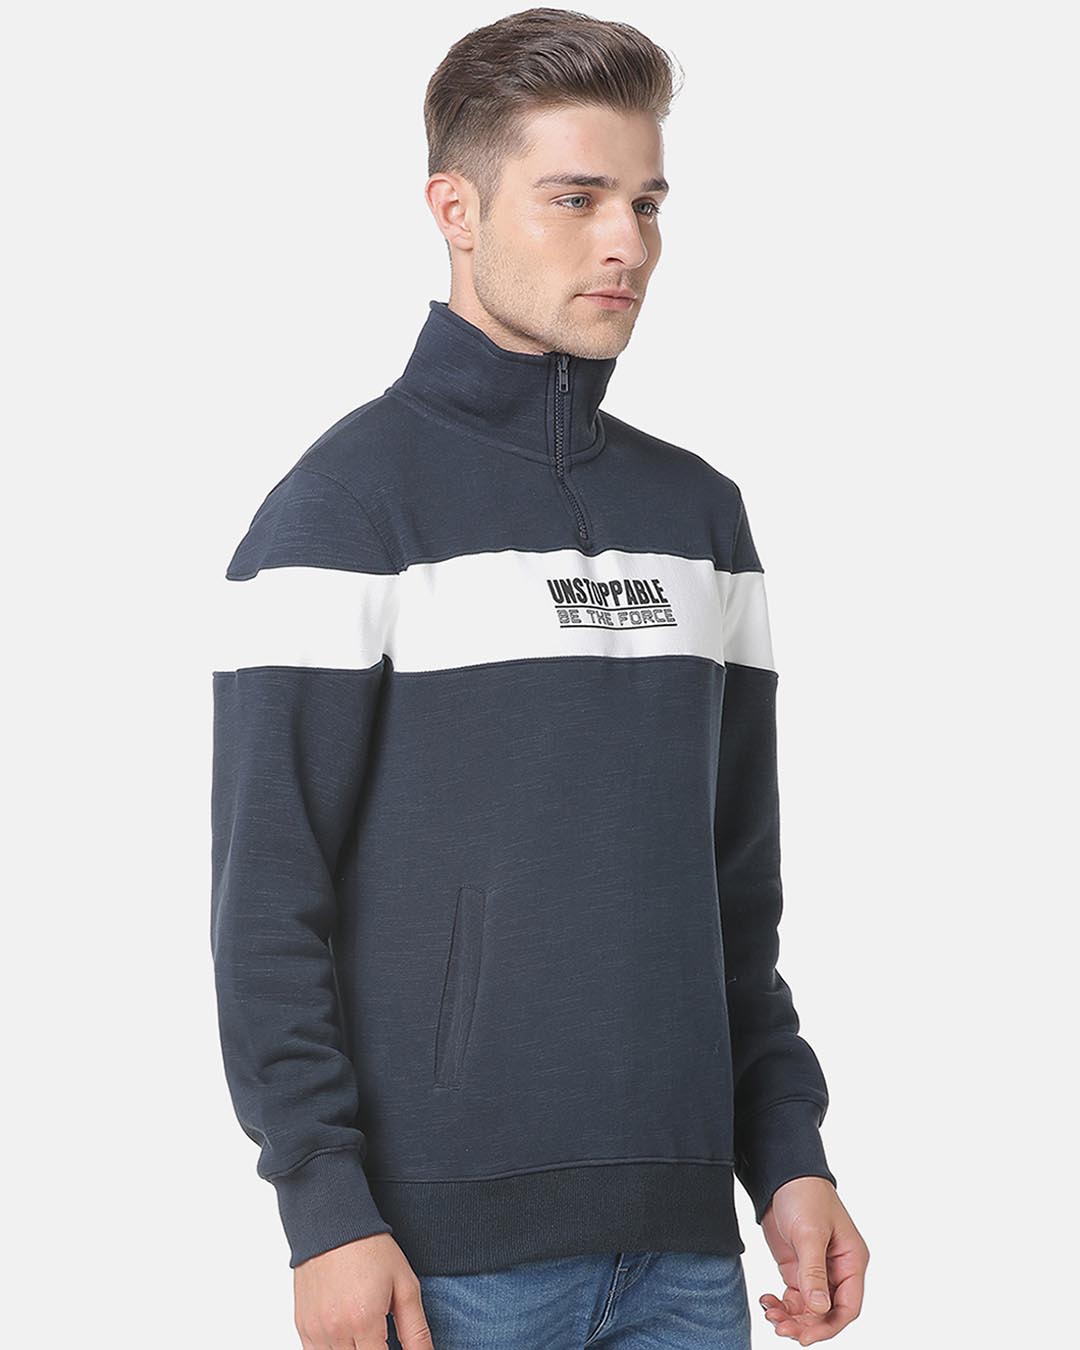 Shop Full Sleeve Printed Men's Casual Sweatshirt-Back